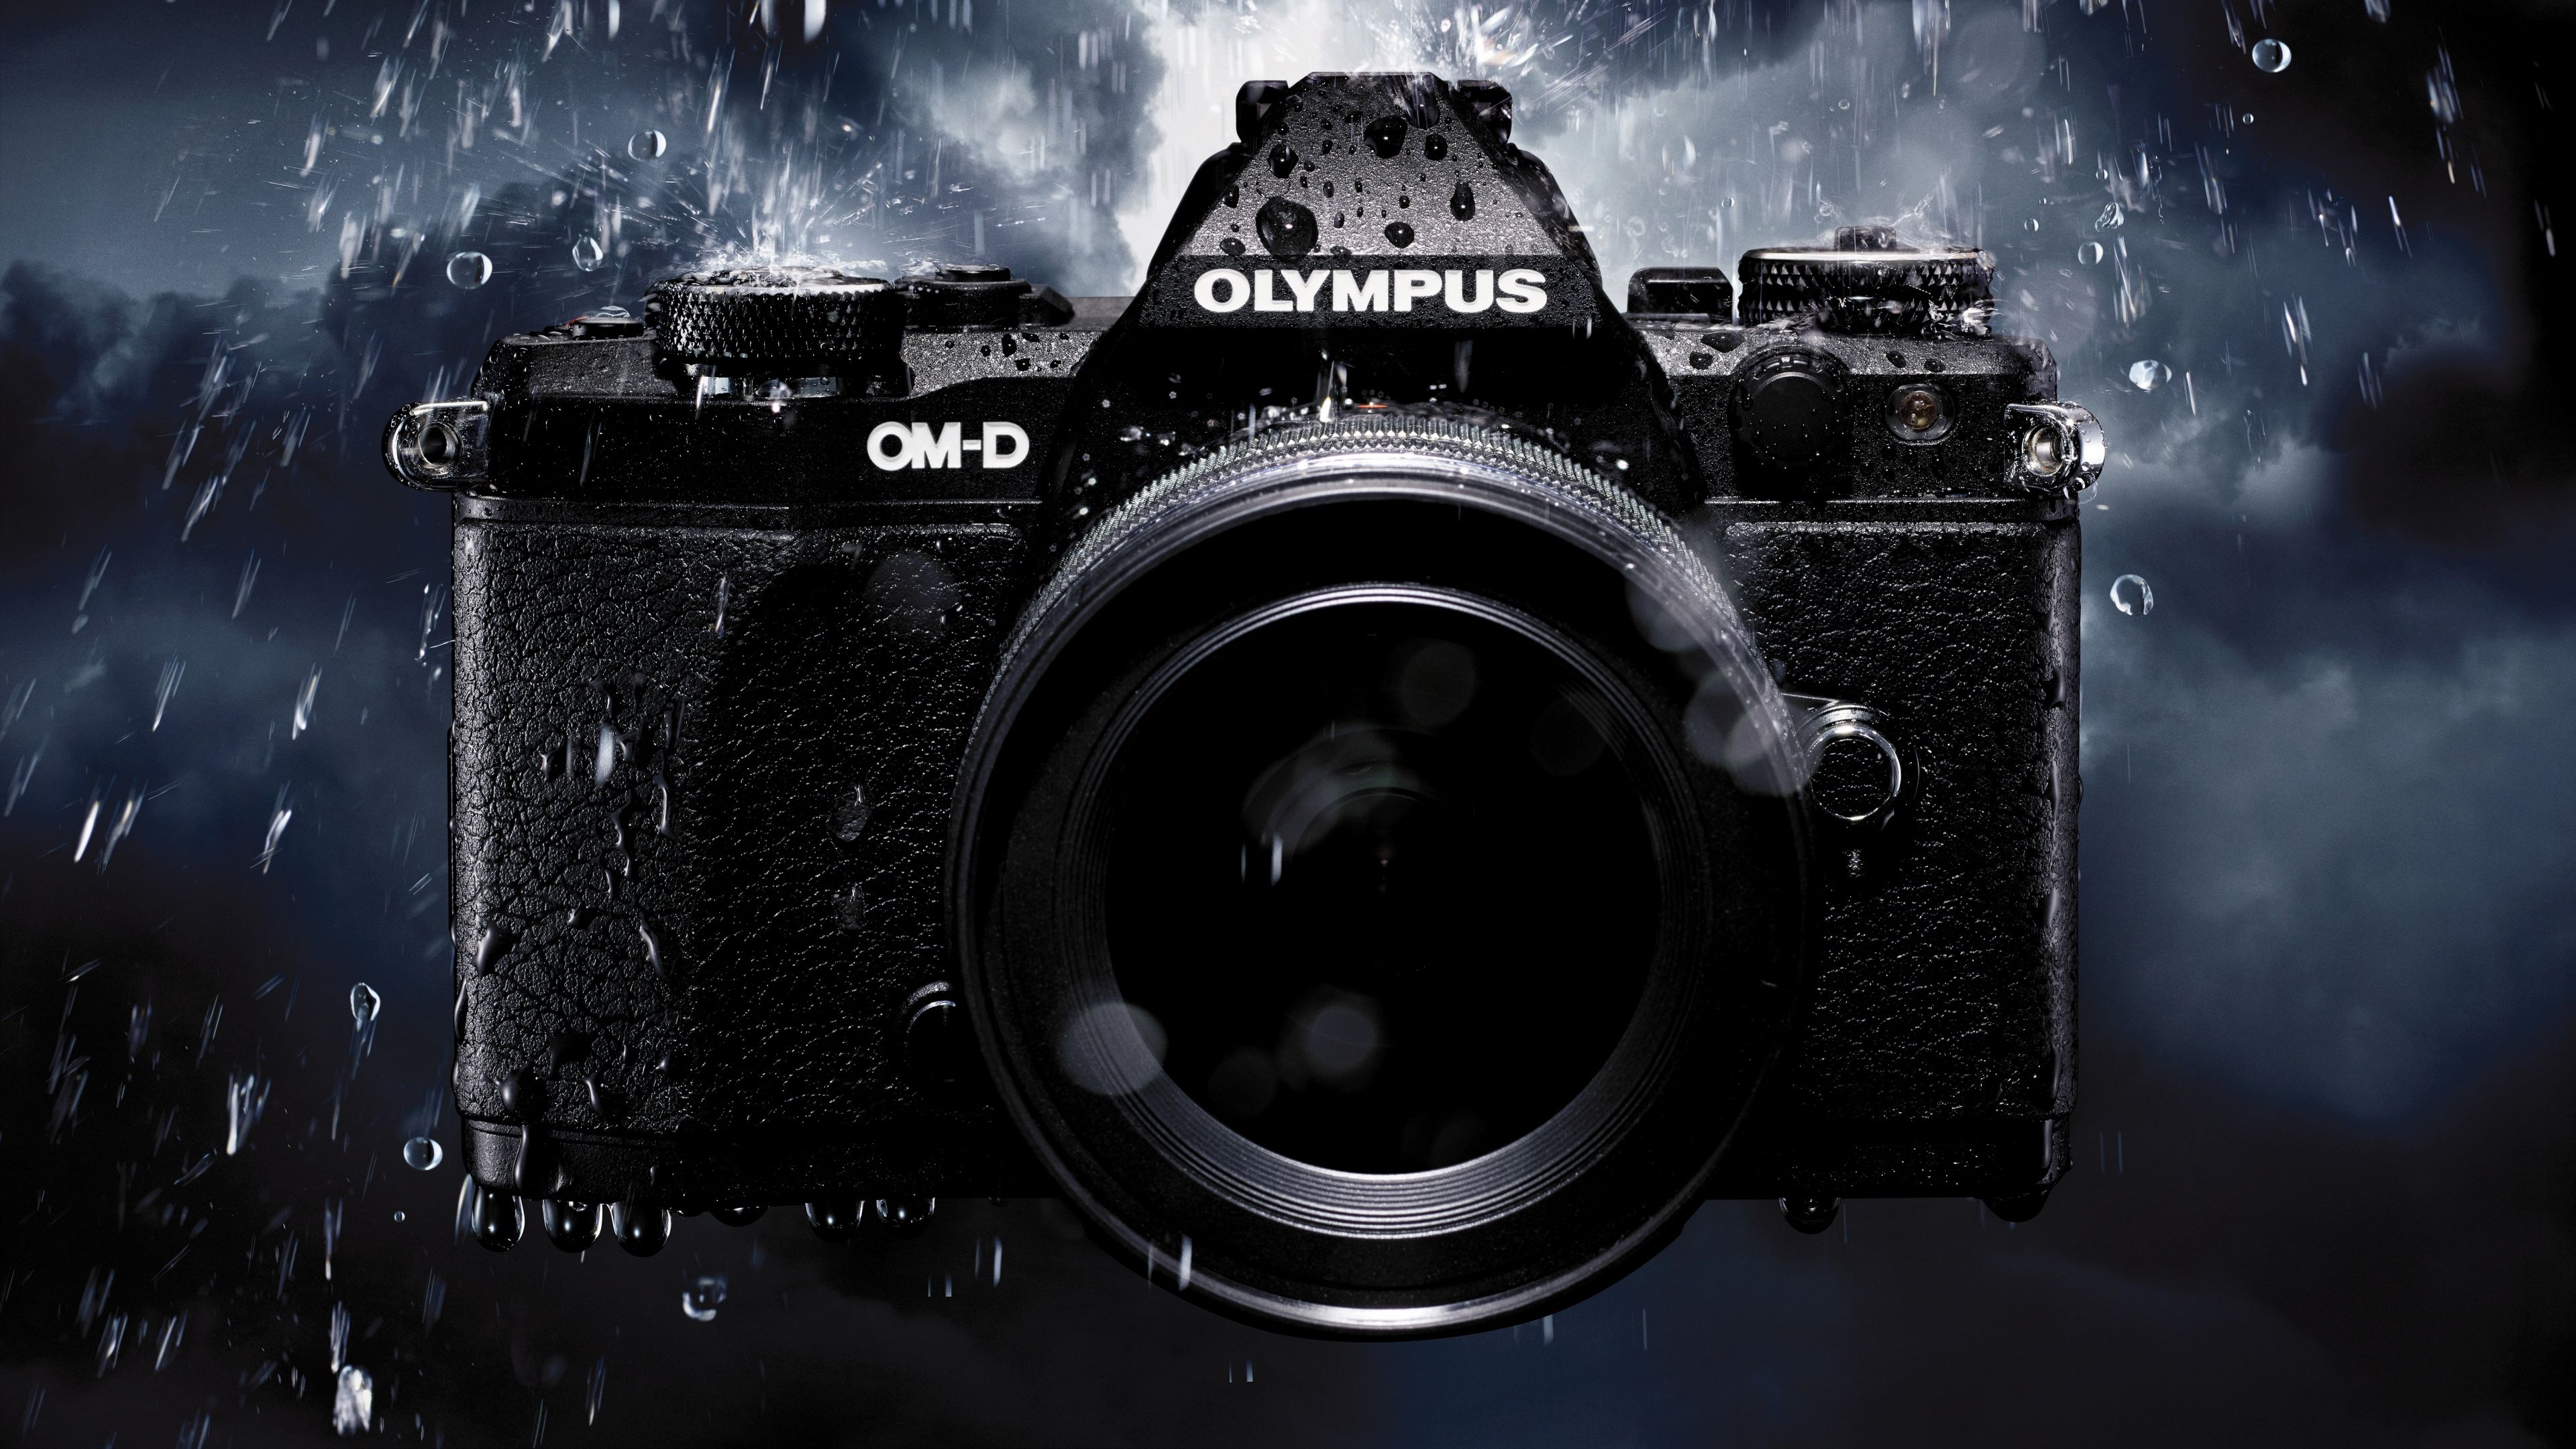 Download Wallpaper 3840x2160 Olympus, Camera, Olympus Om D 4K